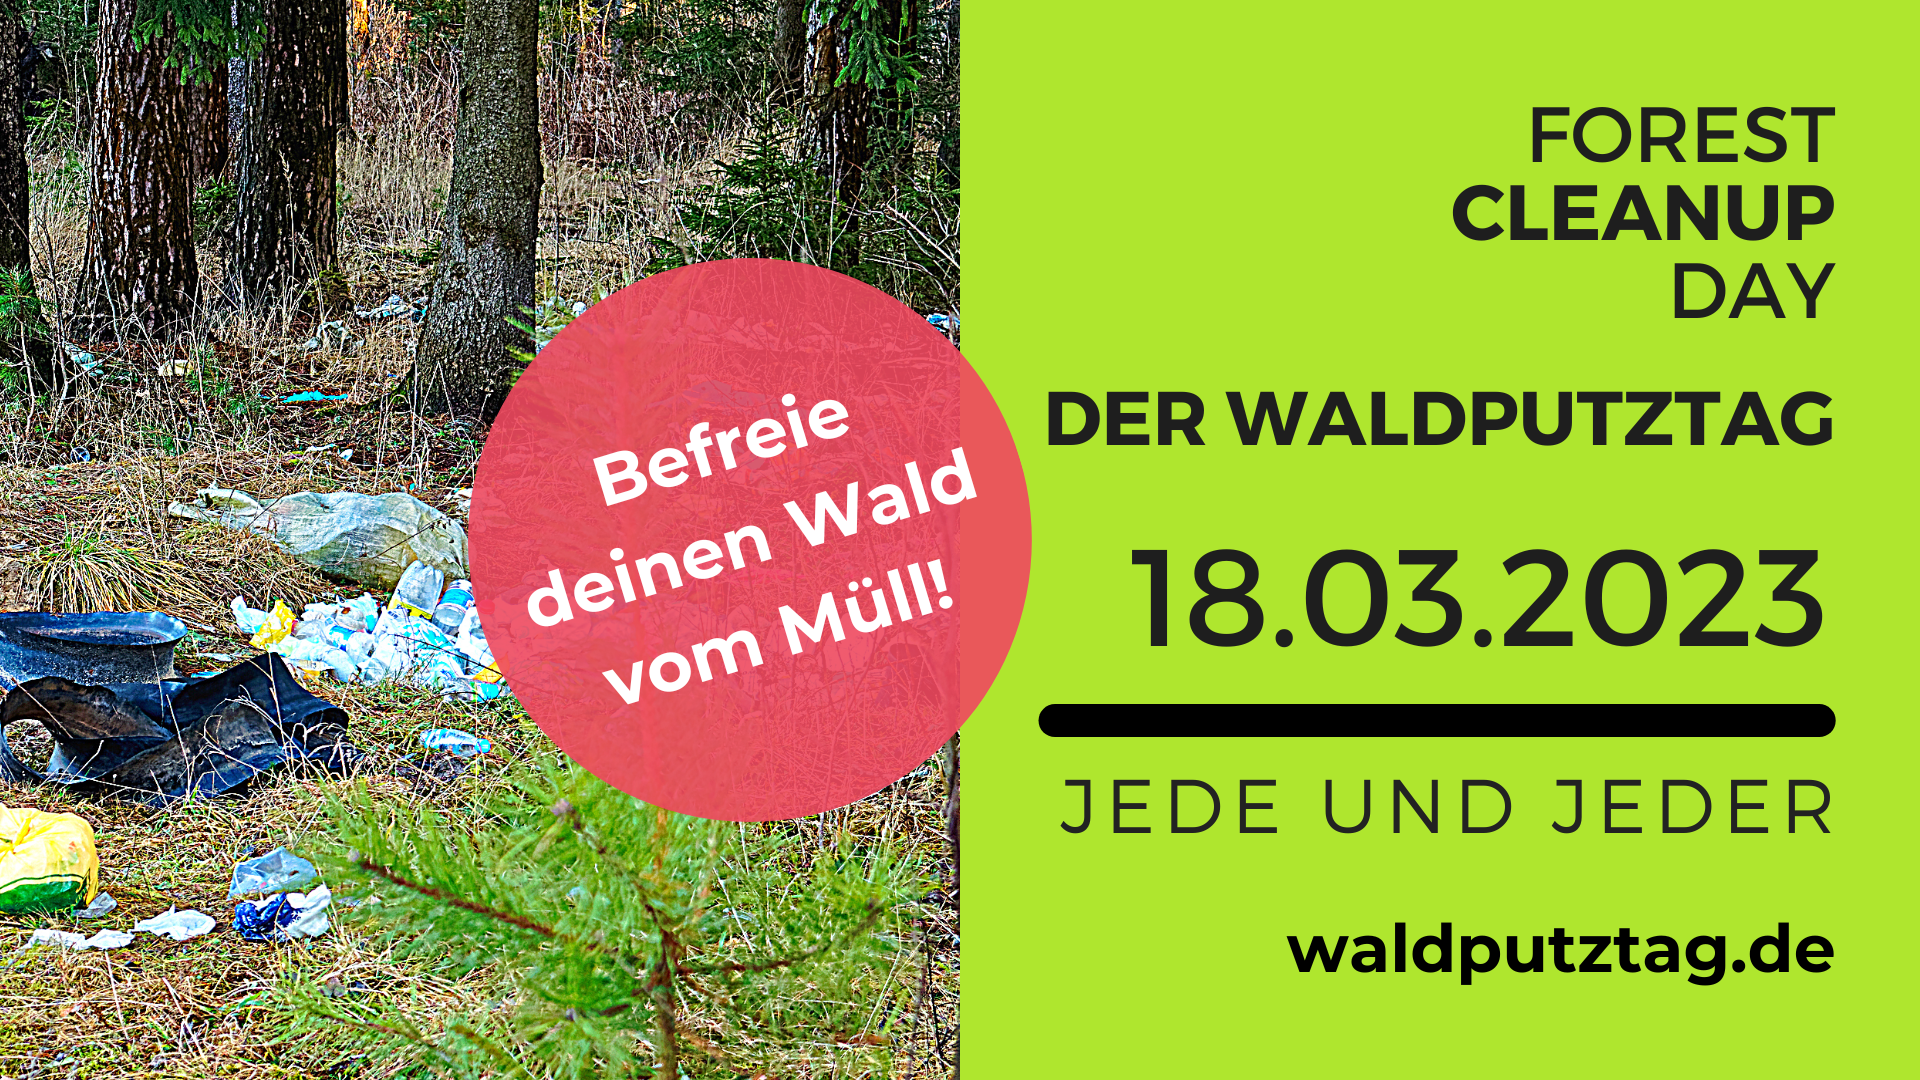 Waldputztag Forest Cleanup Day 18.03.2023